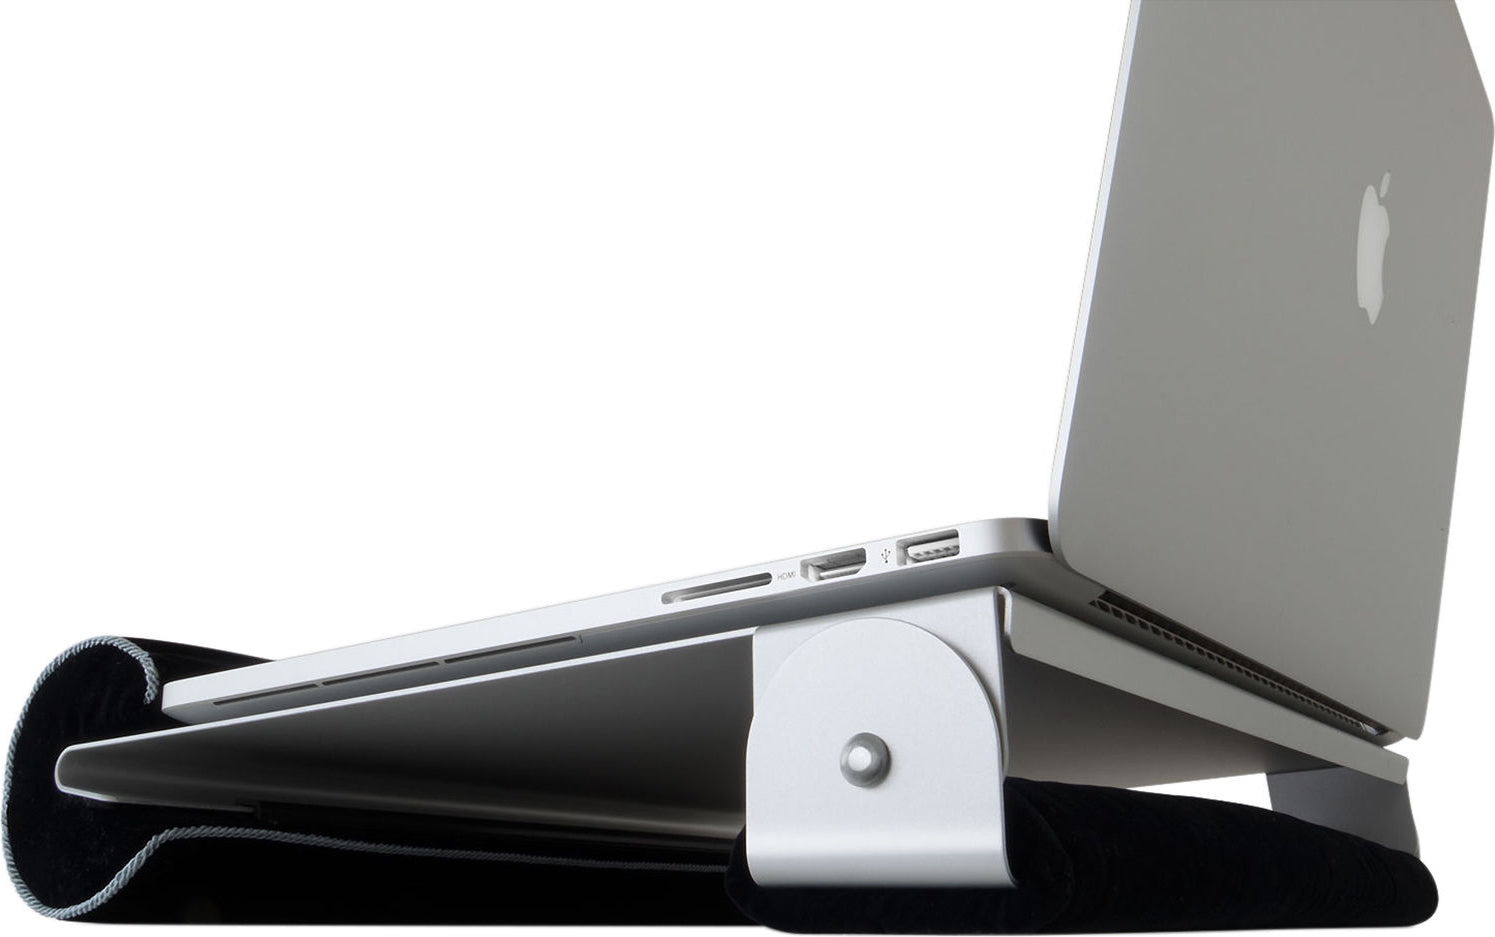 Rain Design iLap Stand for MacBook Pro/Air 12"